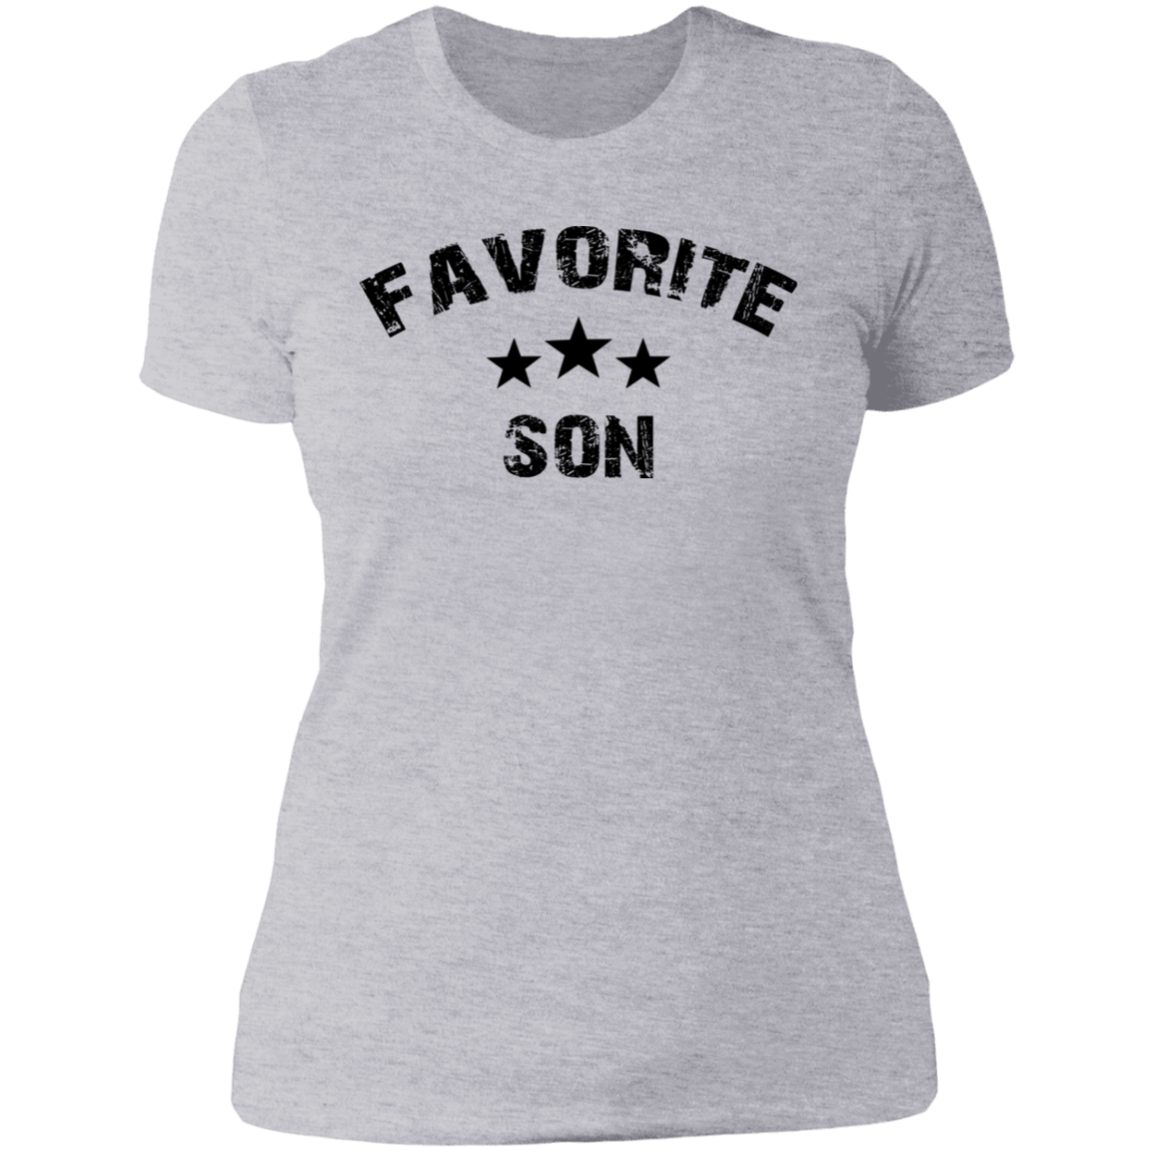 Favorite Son Shirt - Family Unisex T-Shirt, Sweatshirt, Hoodie